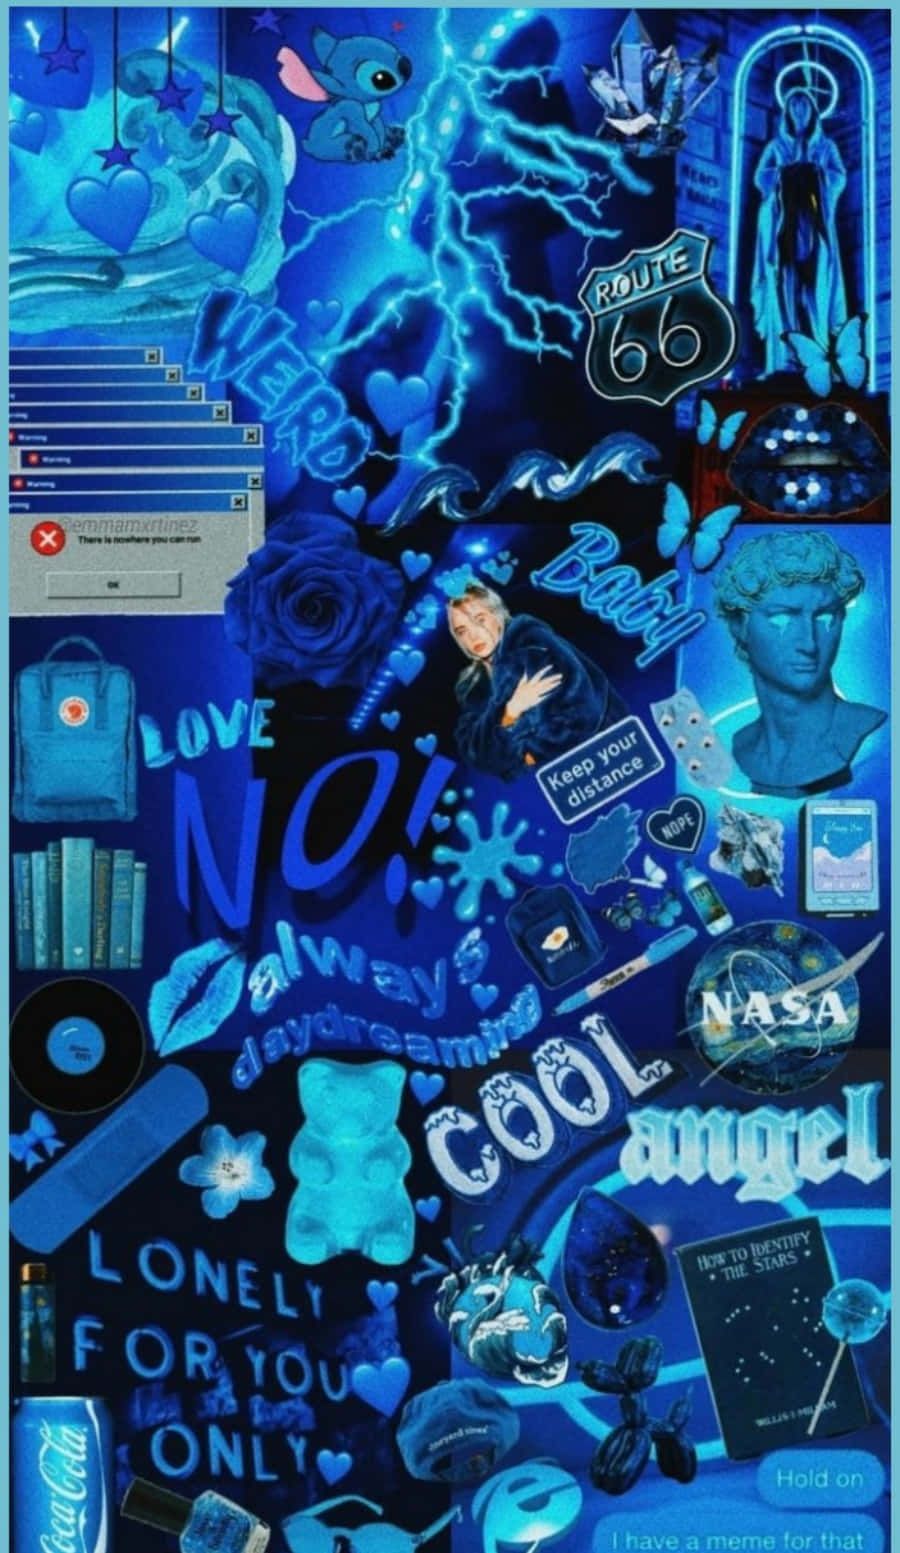 Download Popular Culture Aesthetic Blue Collage Design Wallpaper